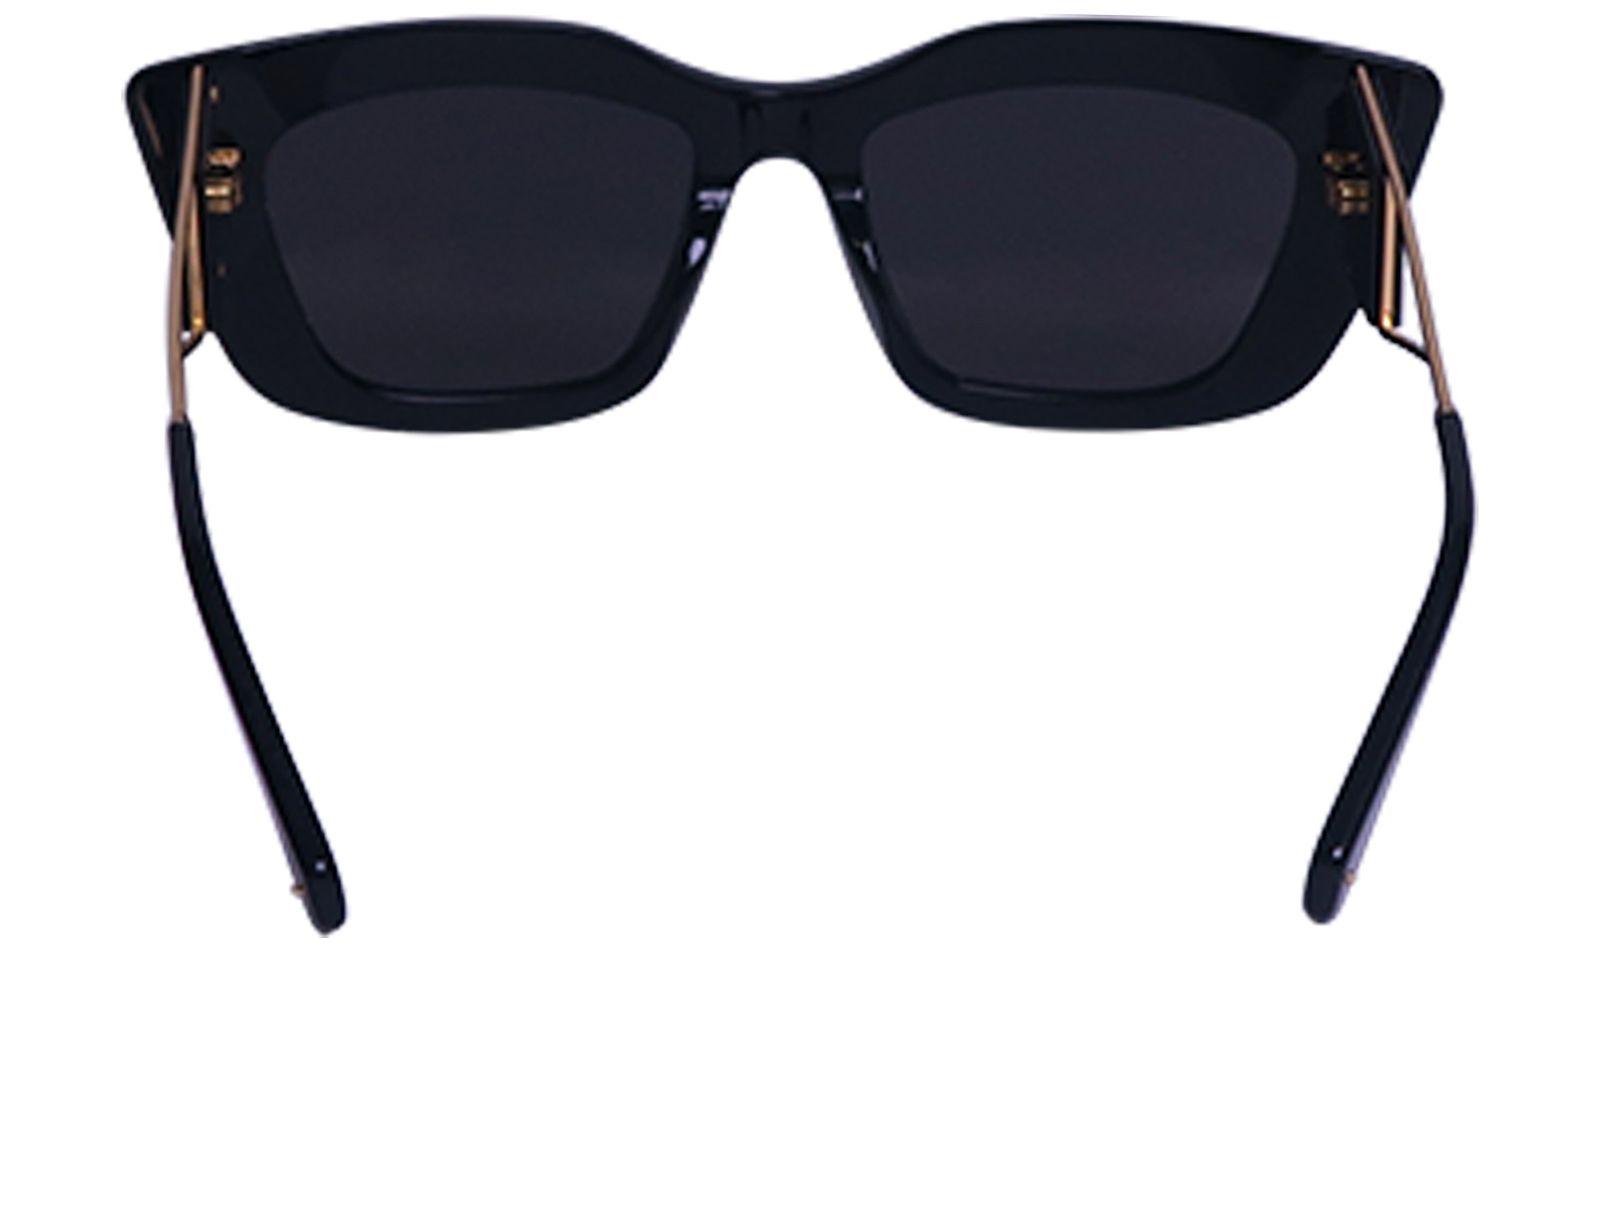 Louis Vuitton, Accessories, Louis Vuitton Arizona Dream Sunglasses Pink